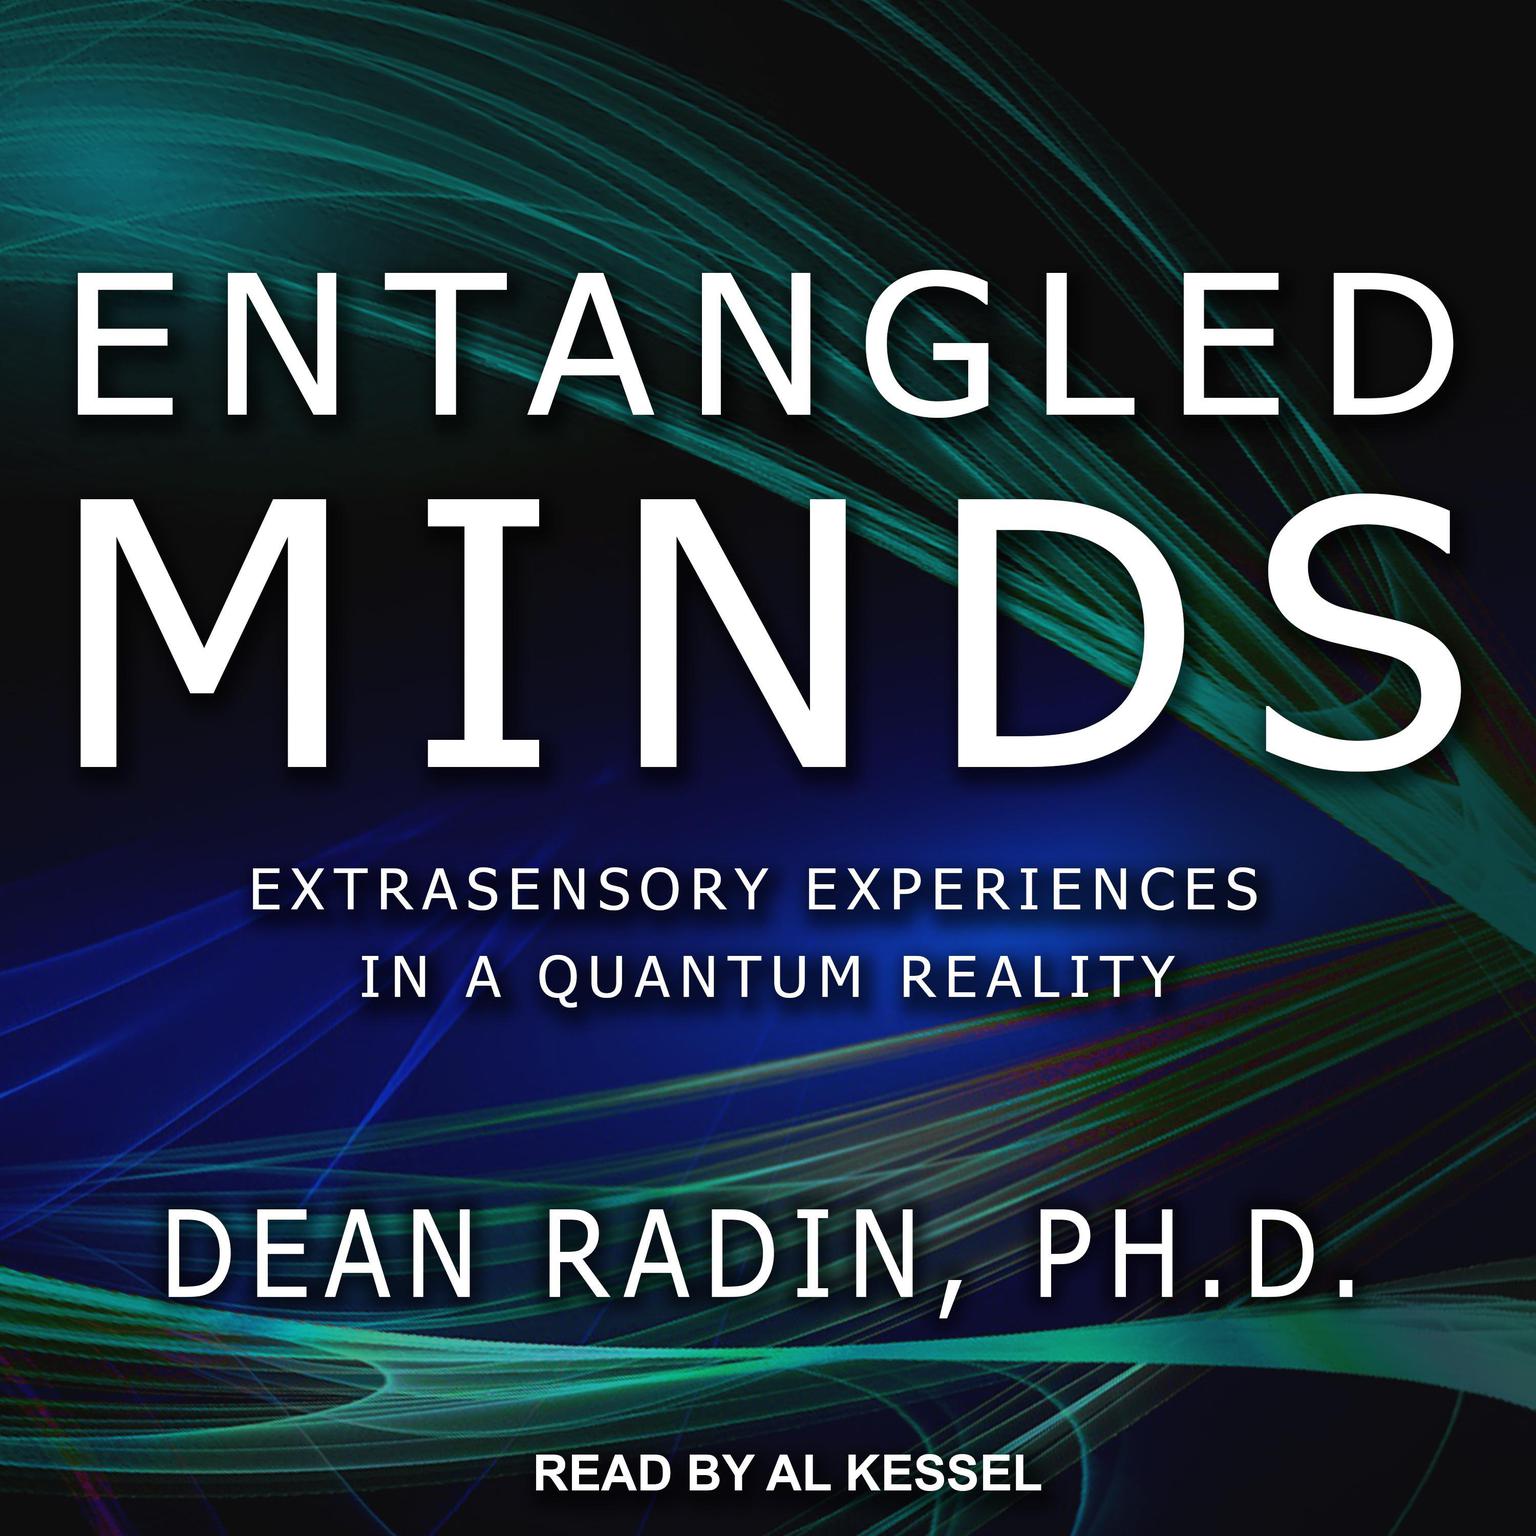 Entangled Minds by Dean Radin